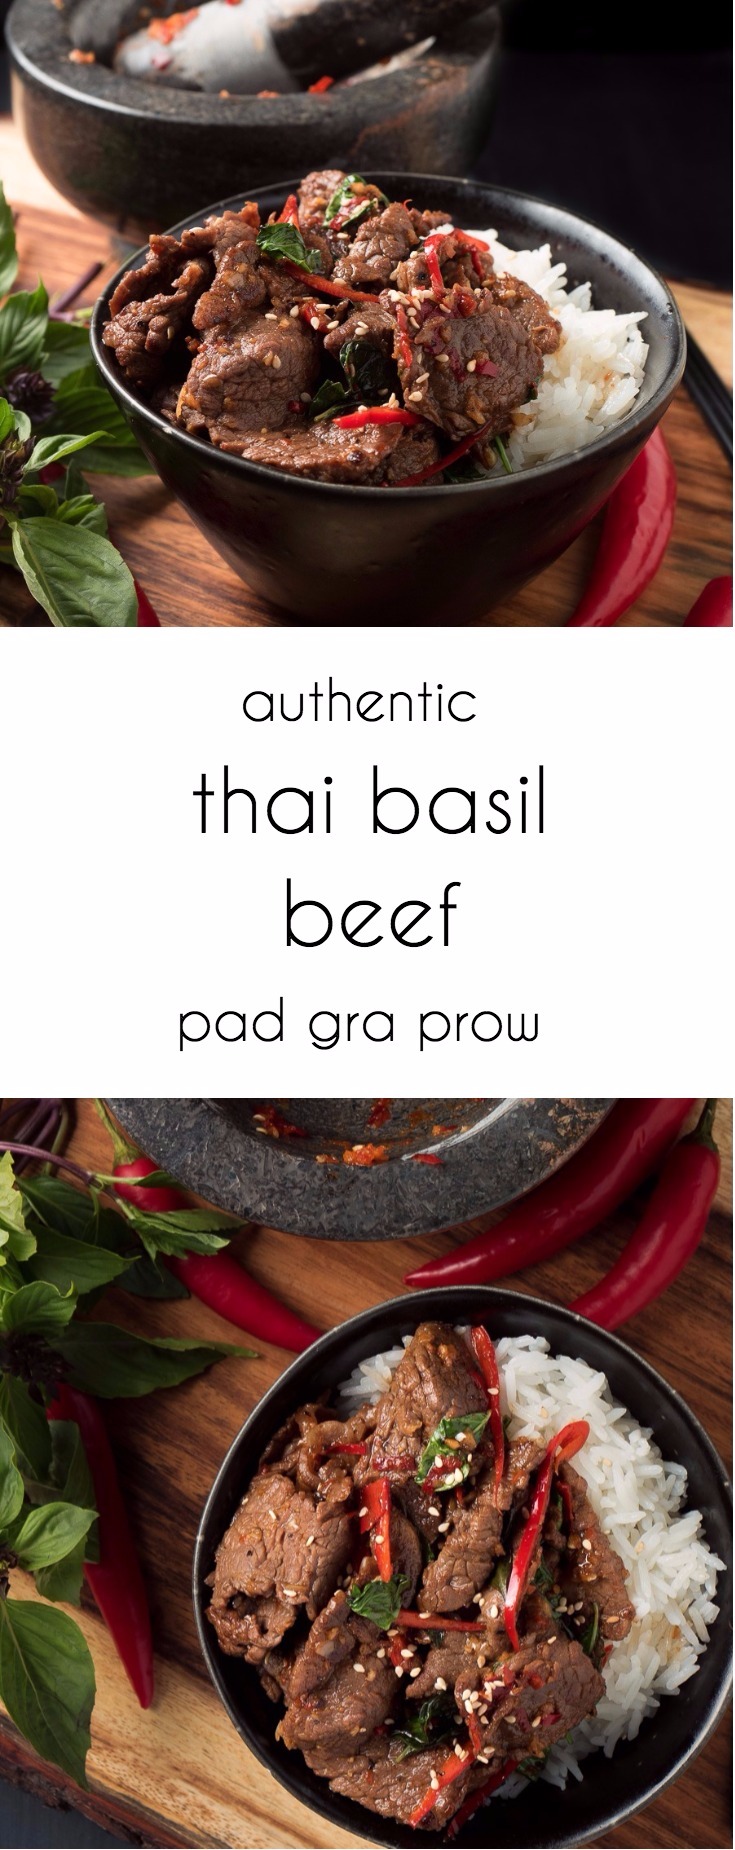 Thai basil beef - pad gra prow